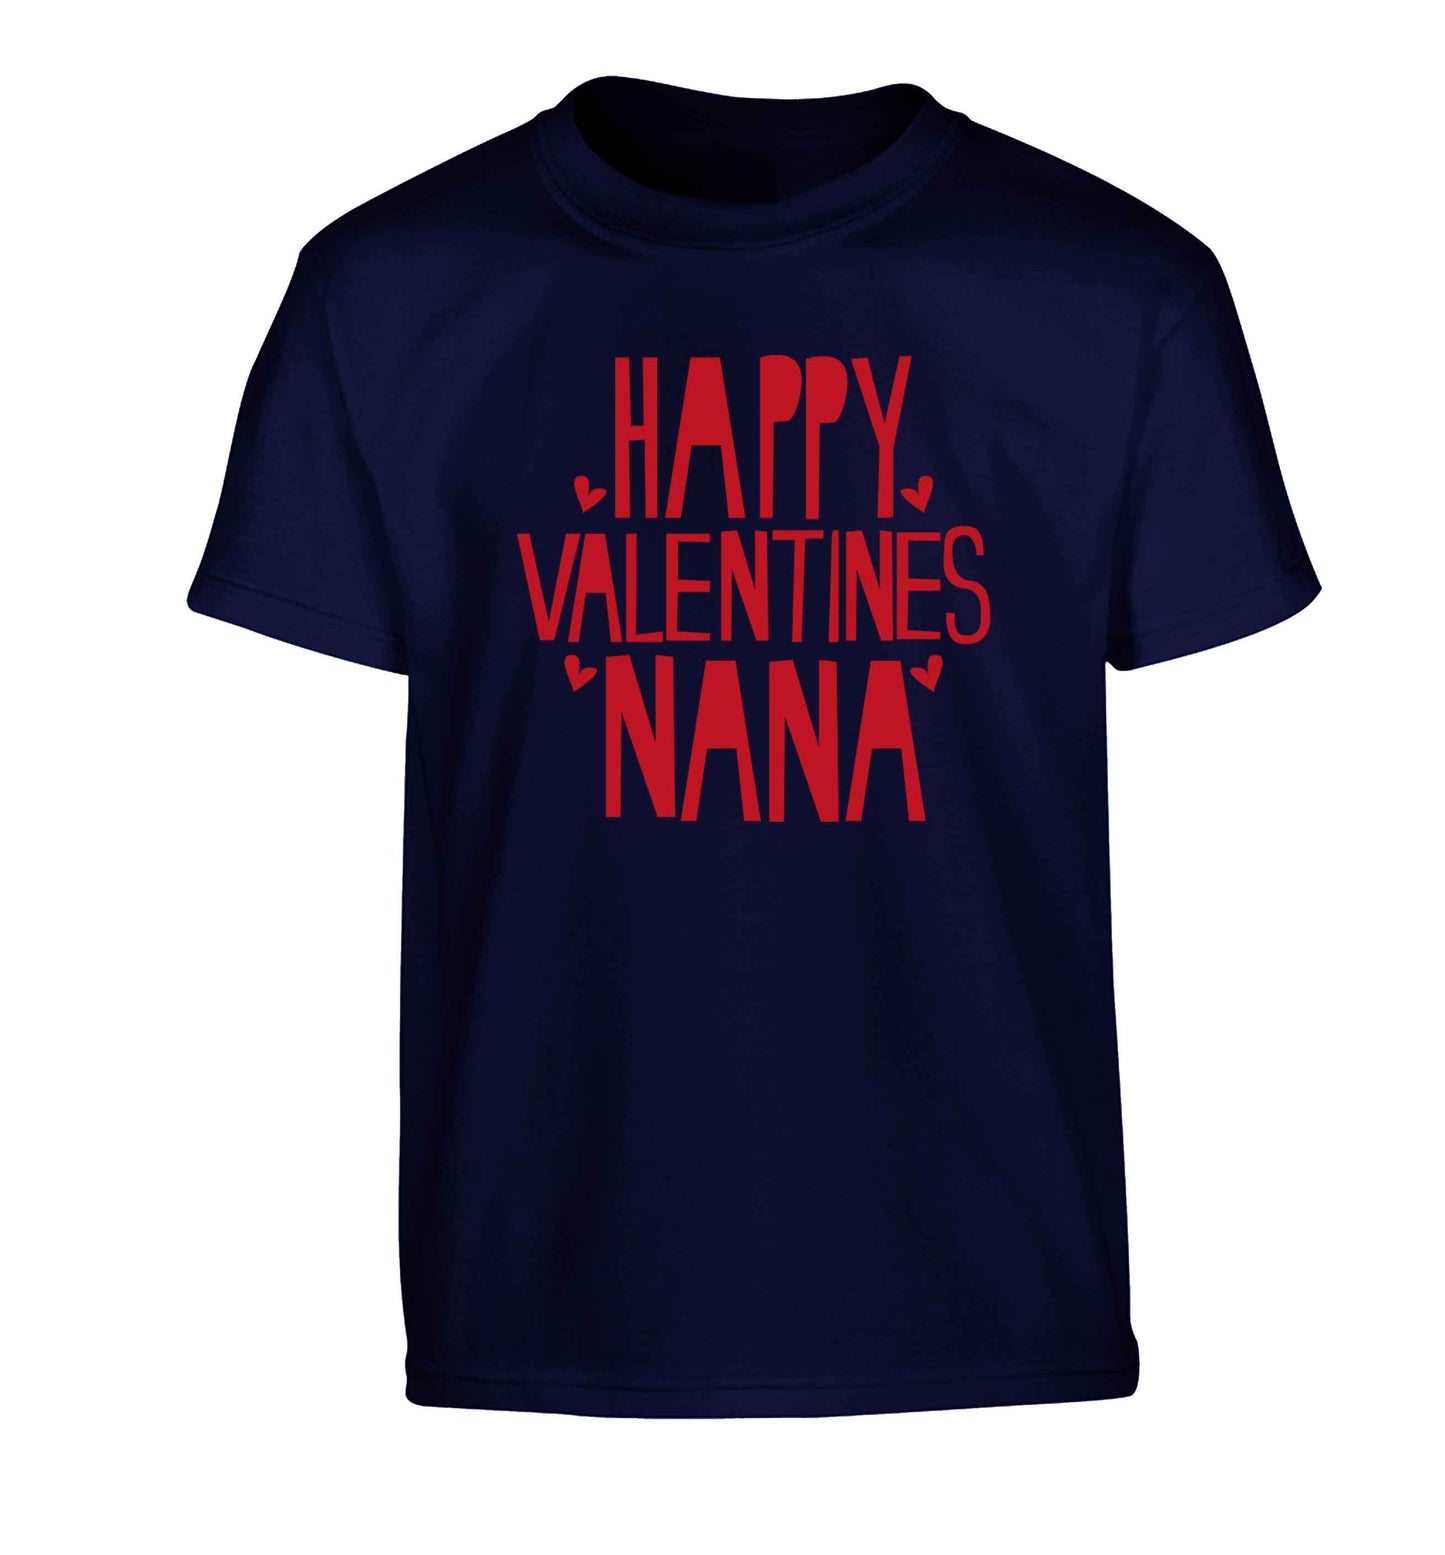 Happy valentines nana Children's navy Tshirt 12-13 Years